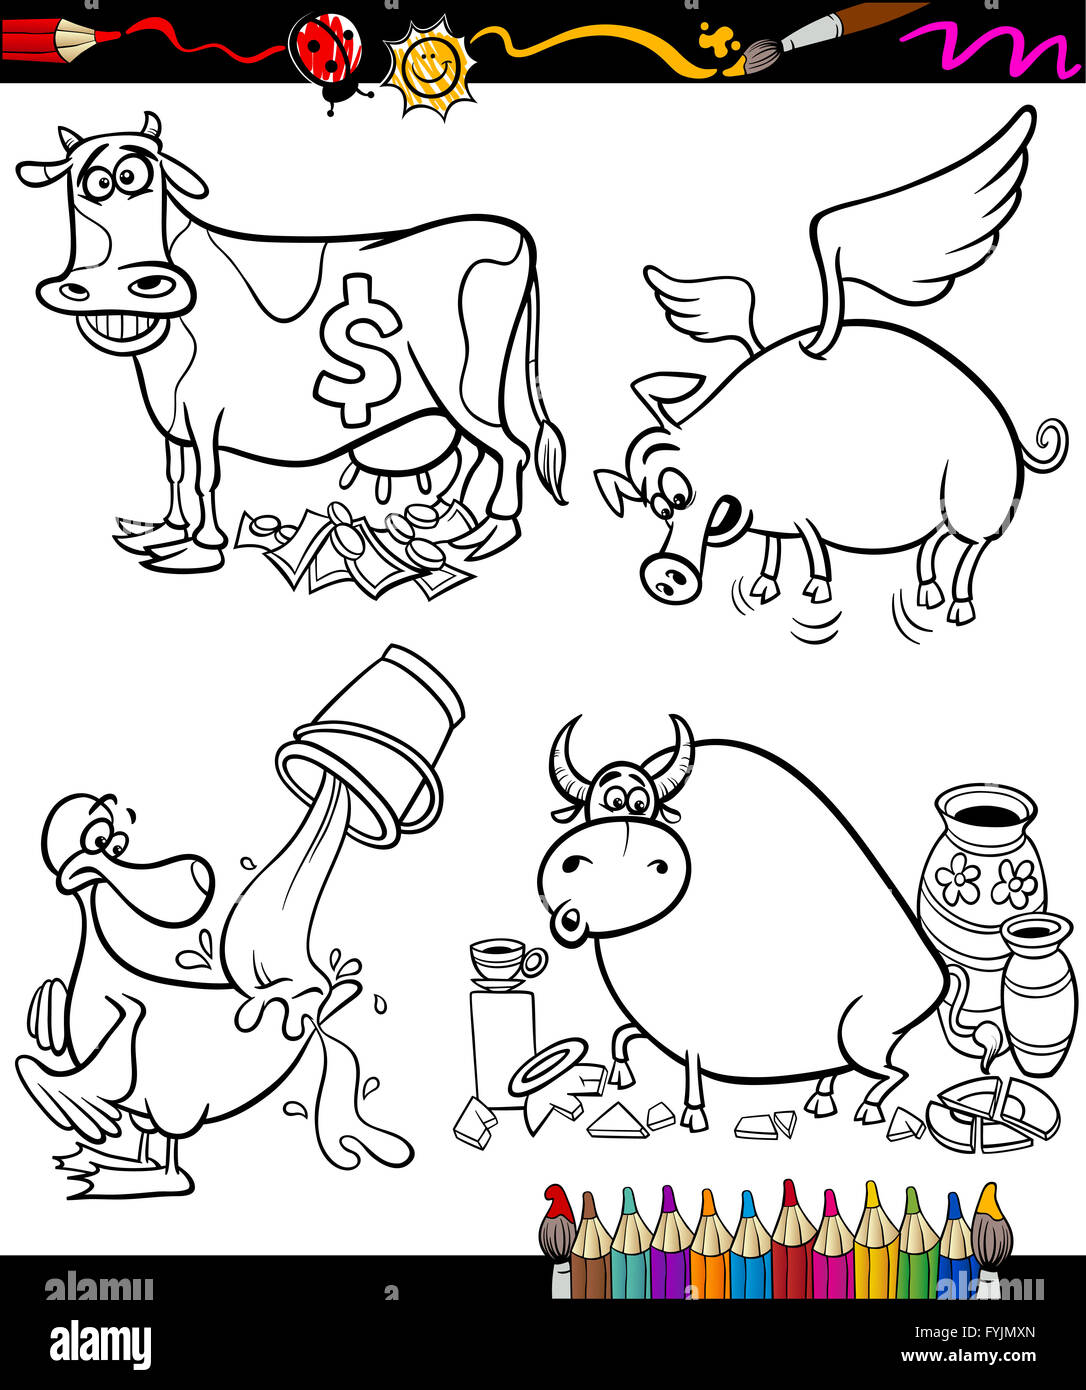 Sayings Cartoon Set for coloring book Stock Photo